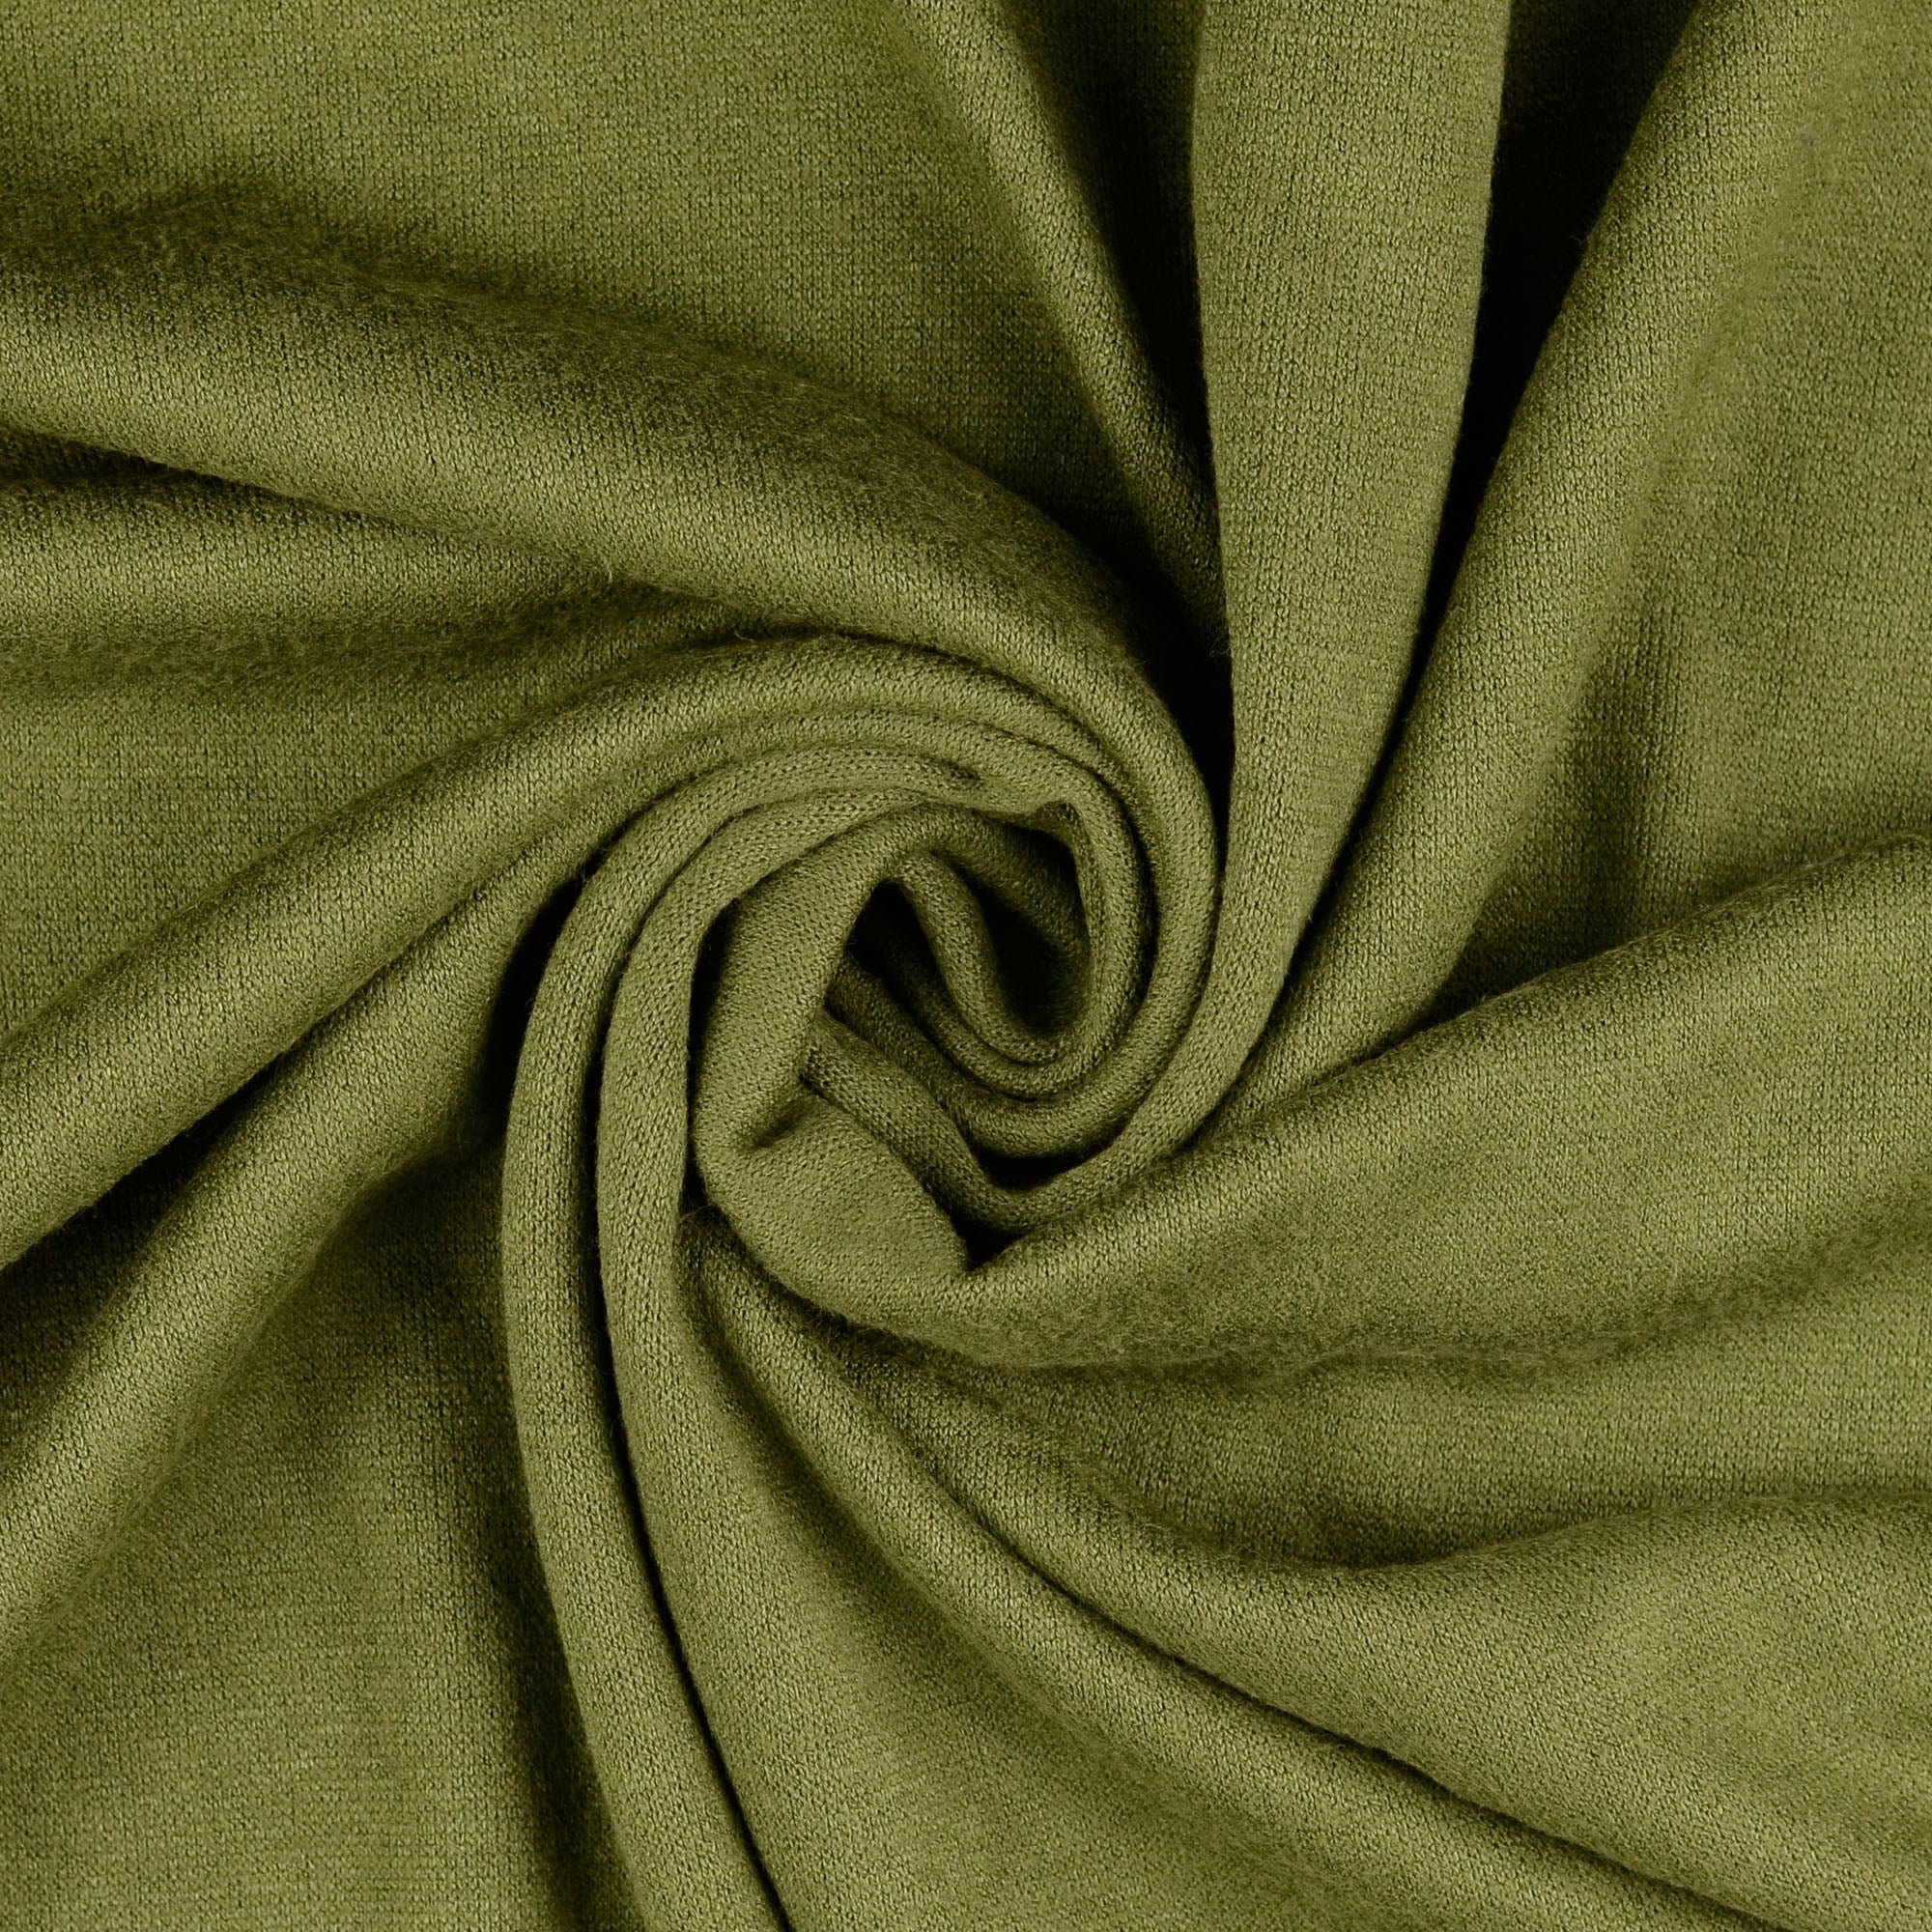 Snug Viscose Blend Sweater Knit in Khaki Green